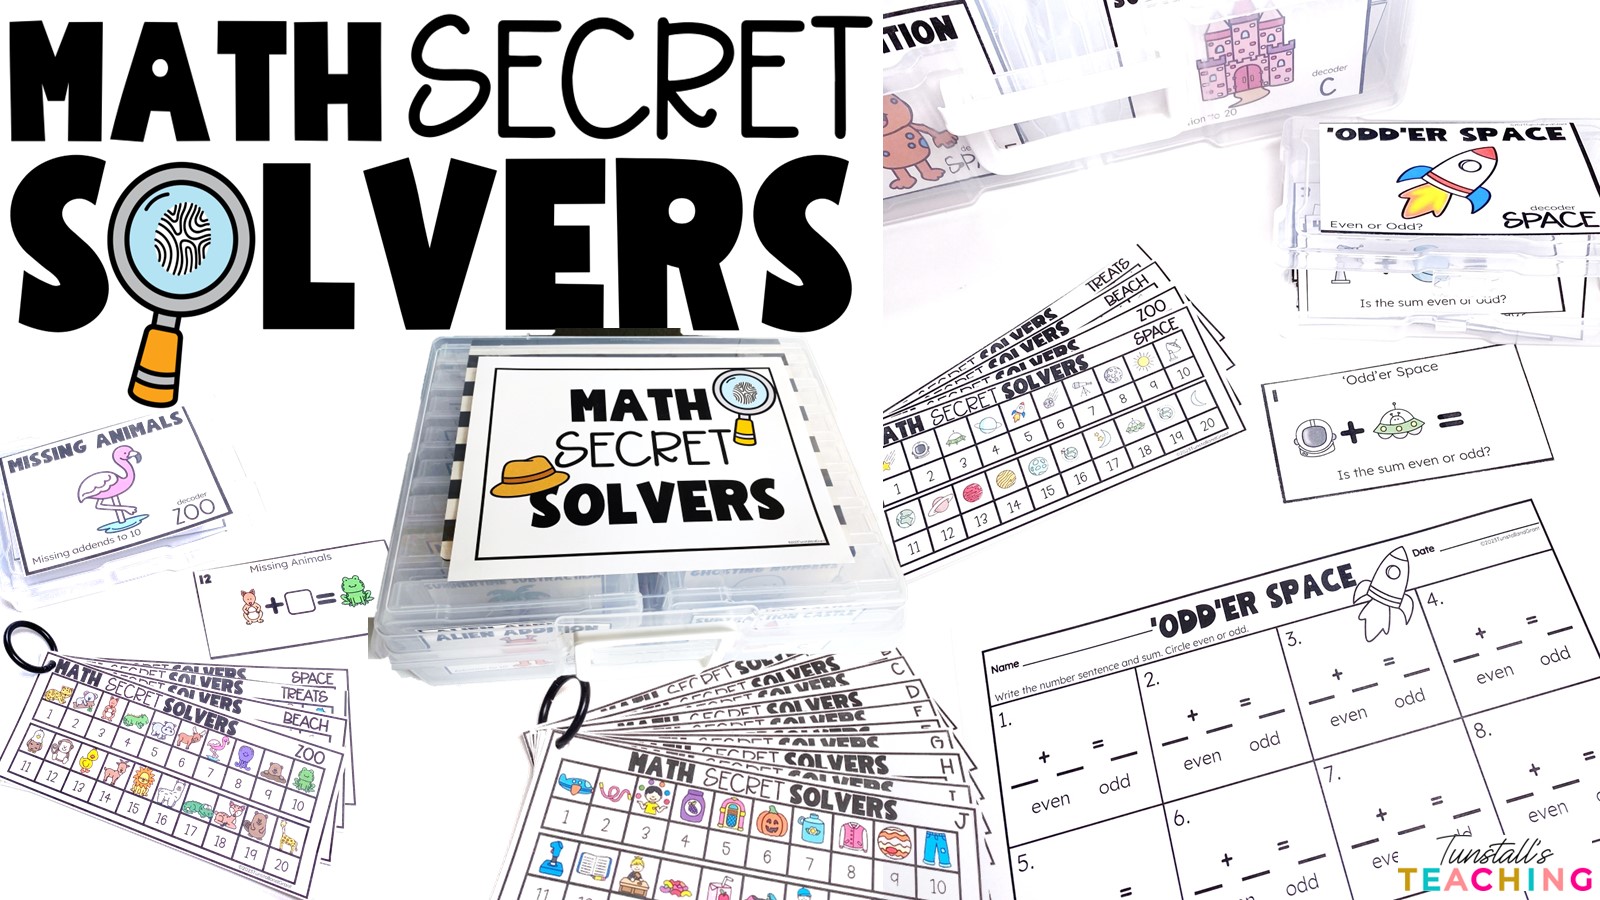 Math Secret Solvers